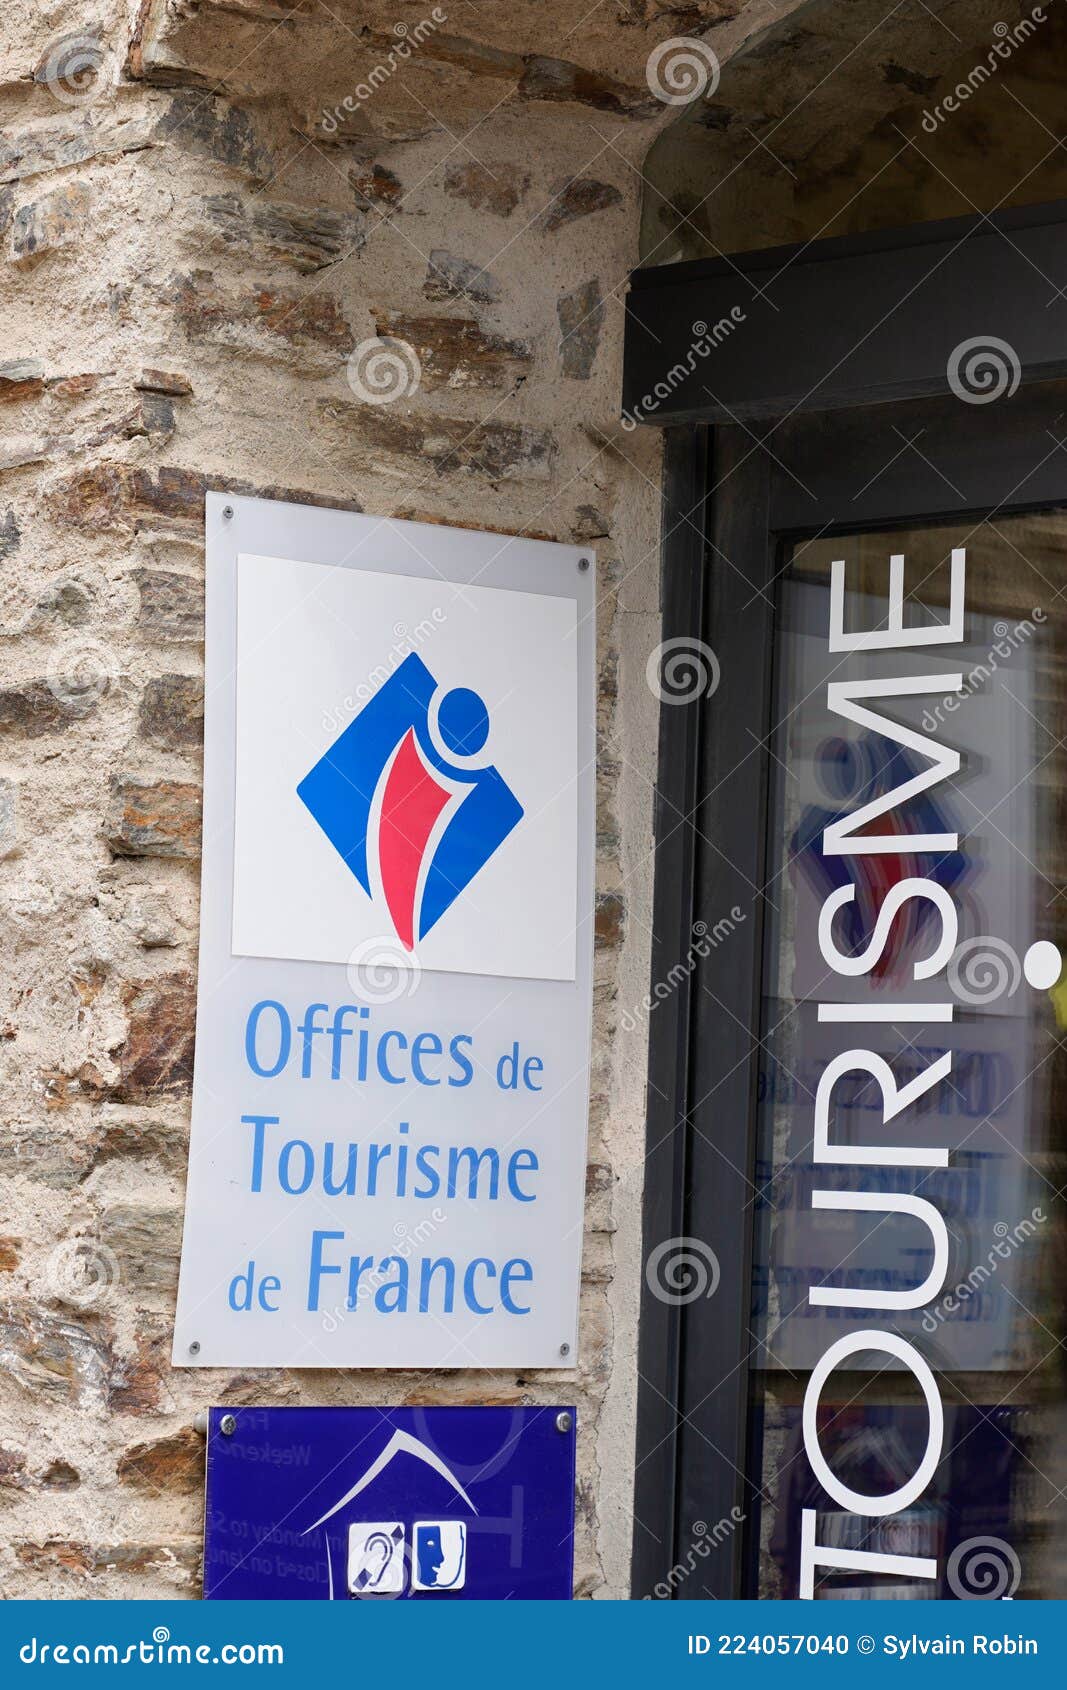 france tourism office